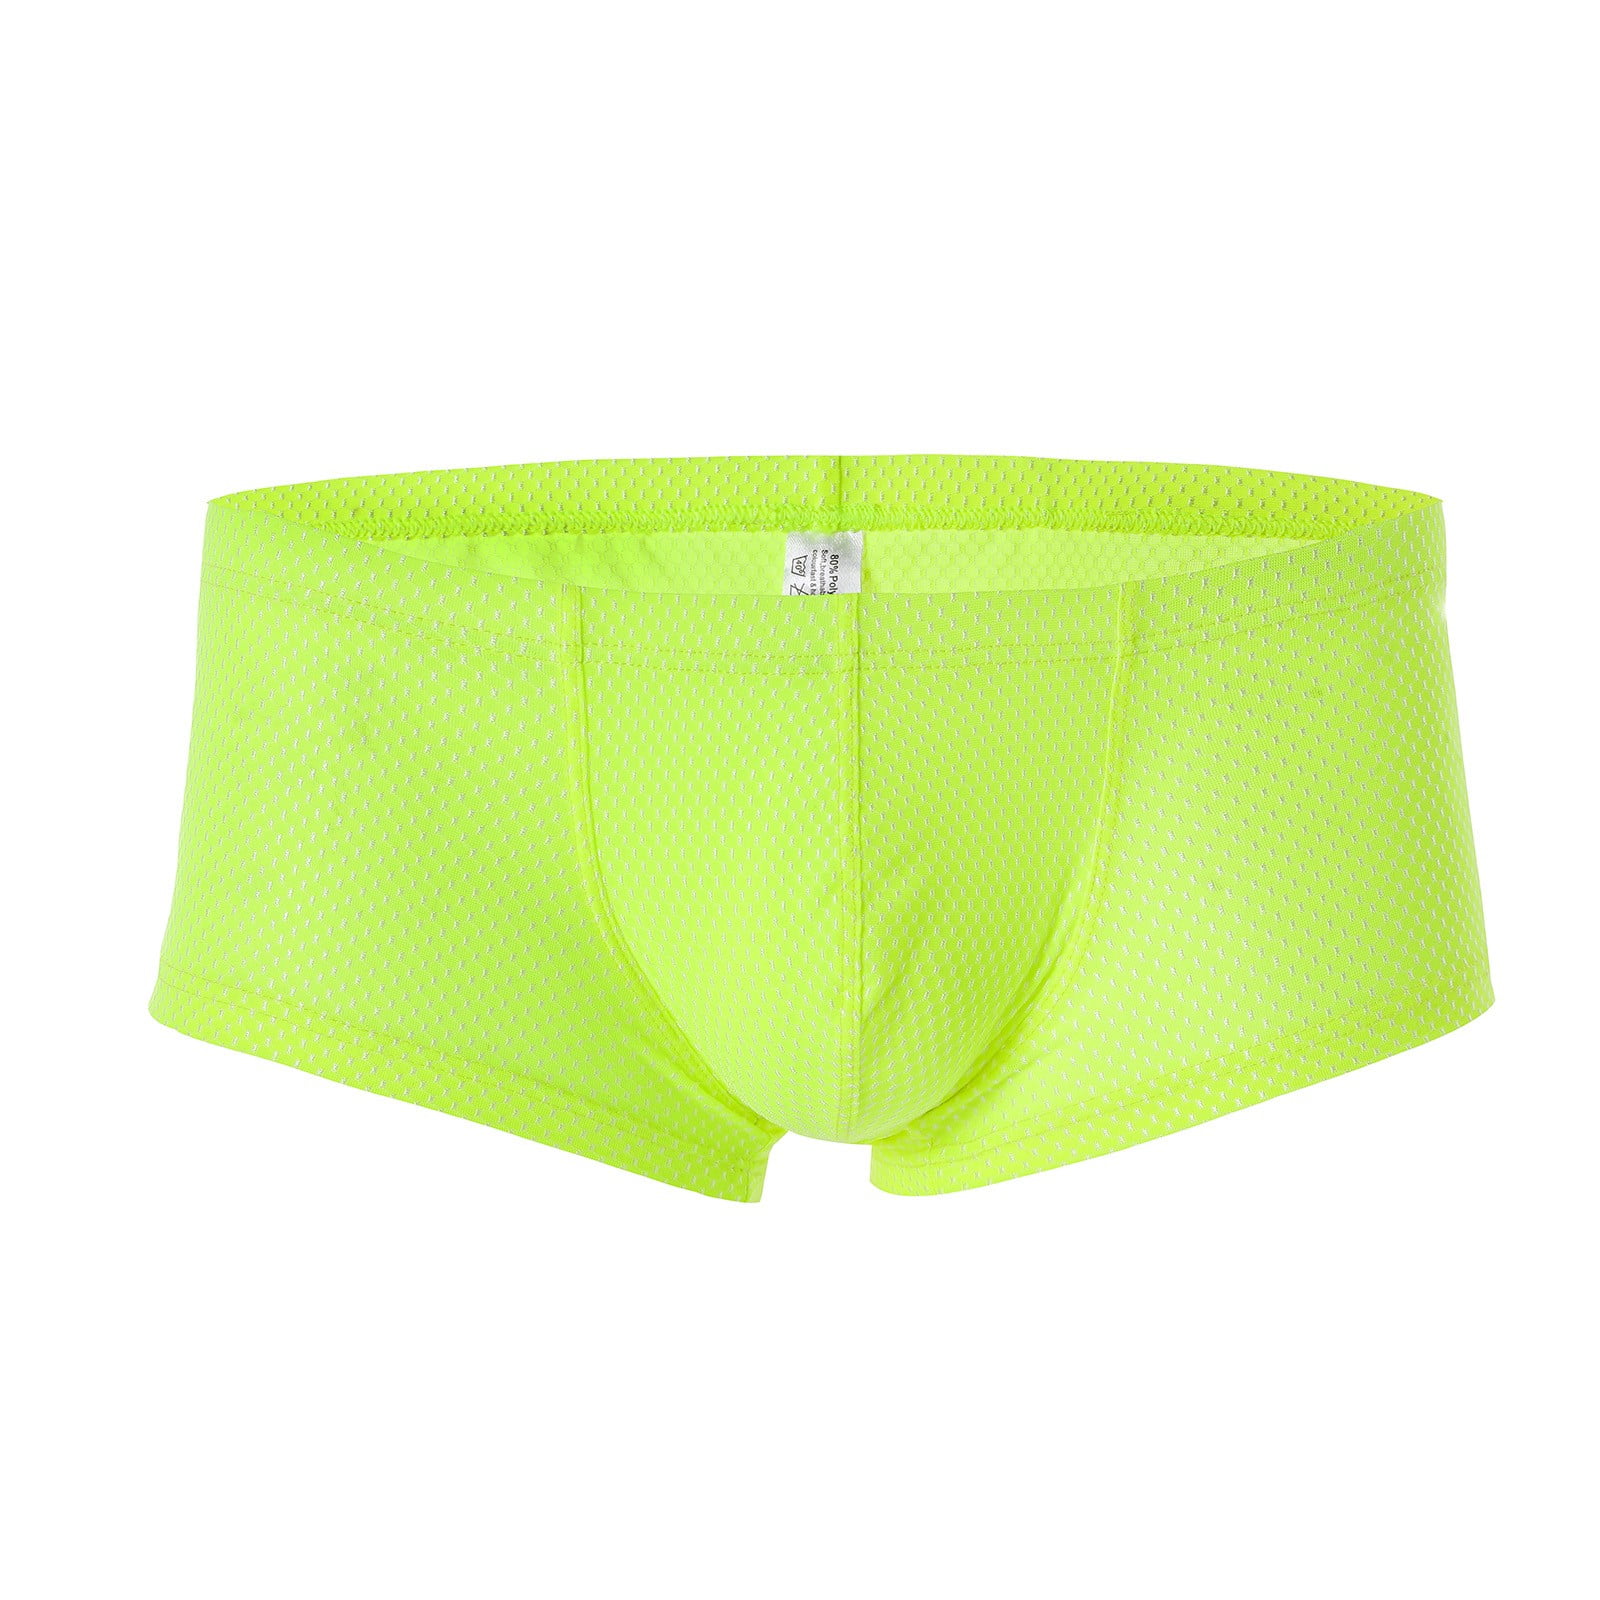 Mens Underwear, Summer Savings, SOPATENOR Men's Sexy Underwear Shorts ...